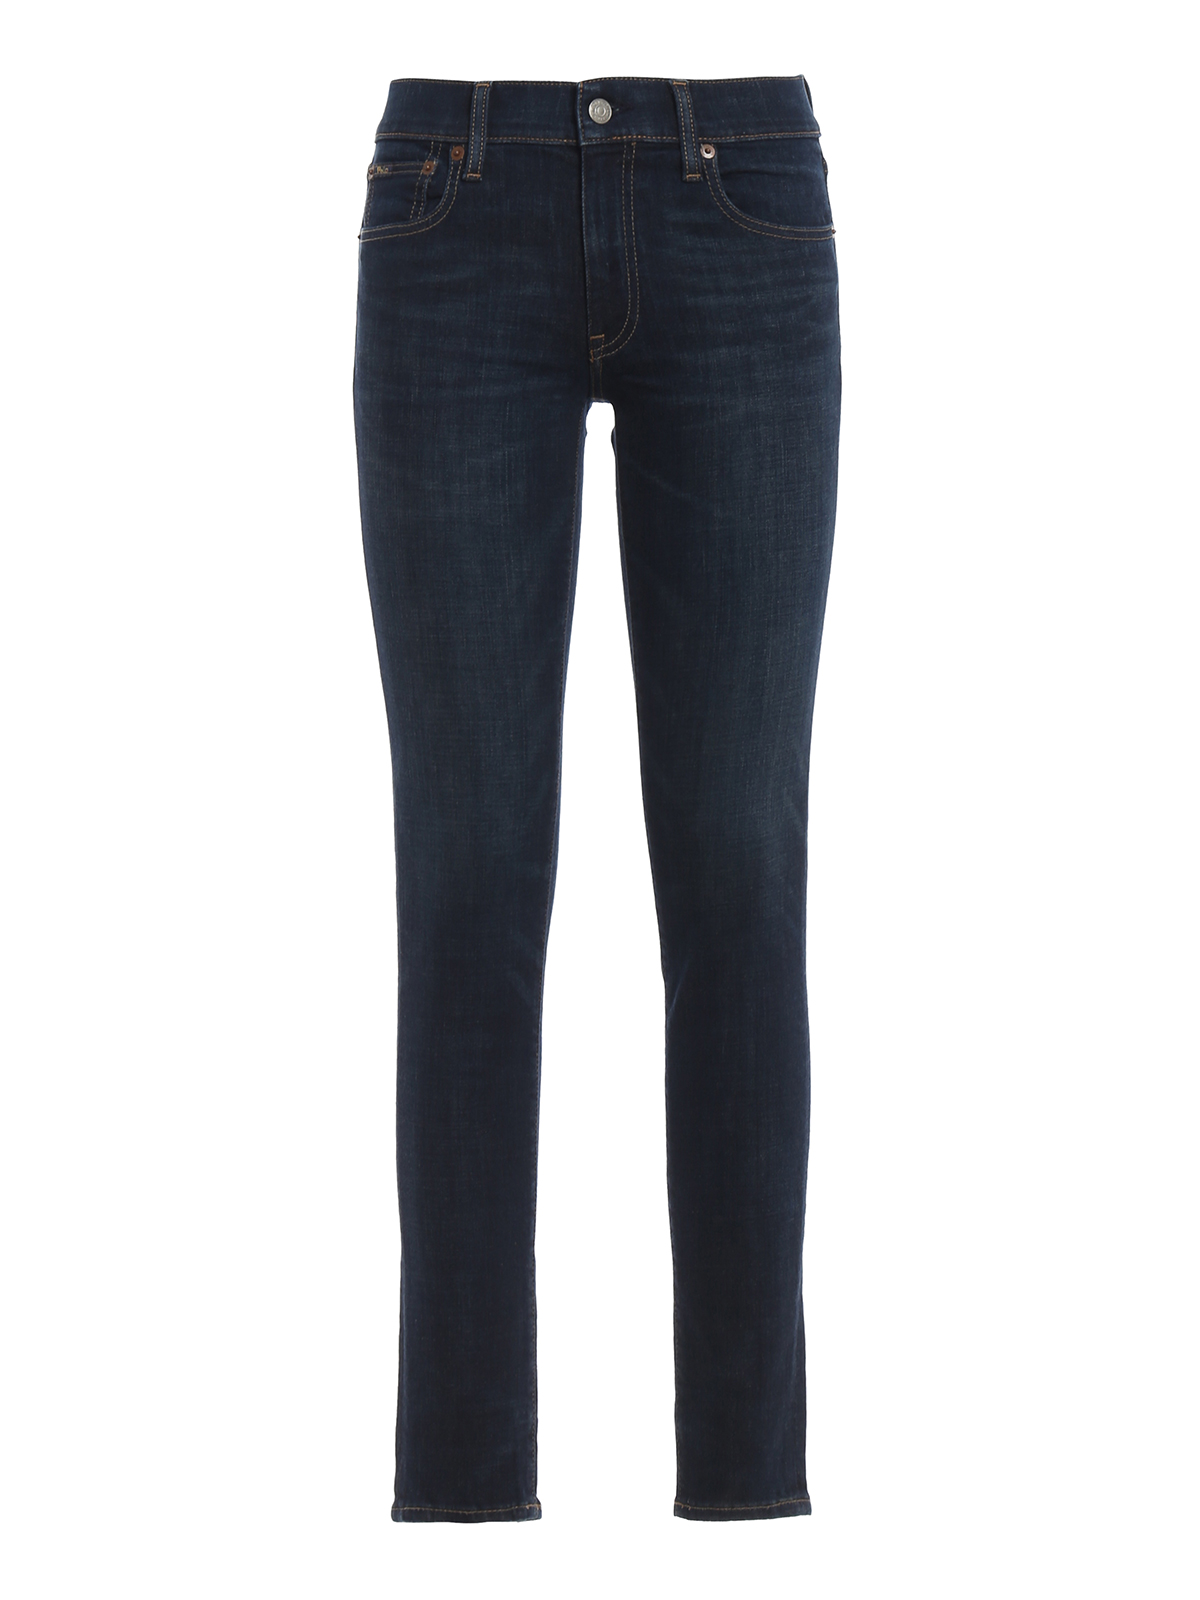 Skinny jeans Polo Ralph Lauren - The Tompkins cotton denim skinny jeans ...